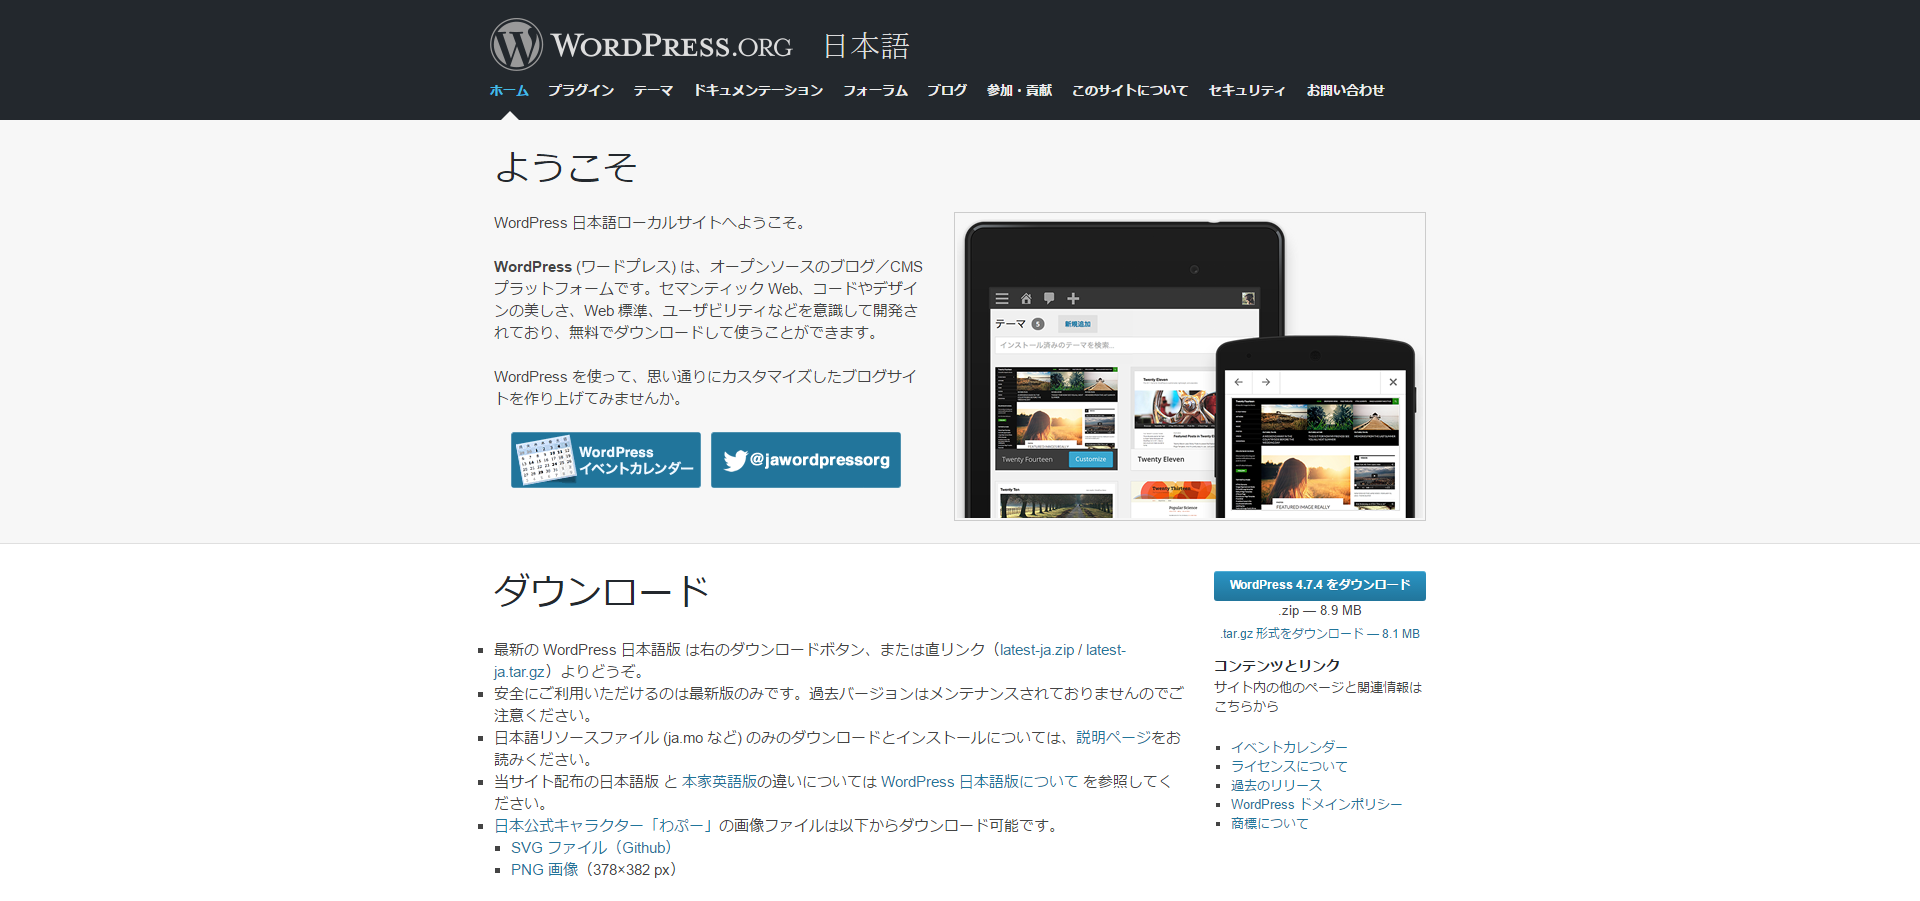 「WordPress」のサイト